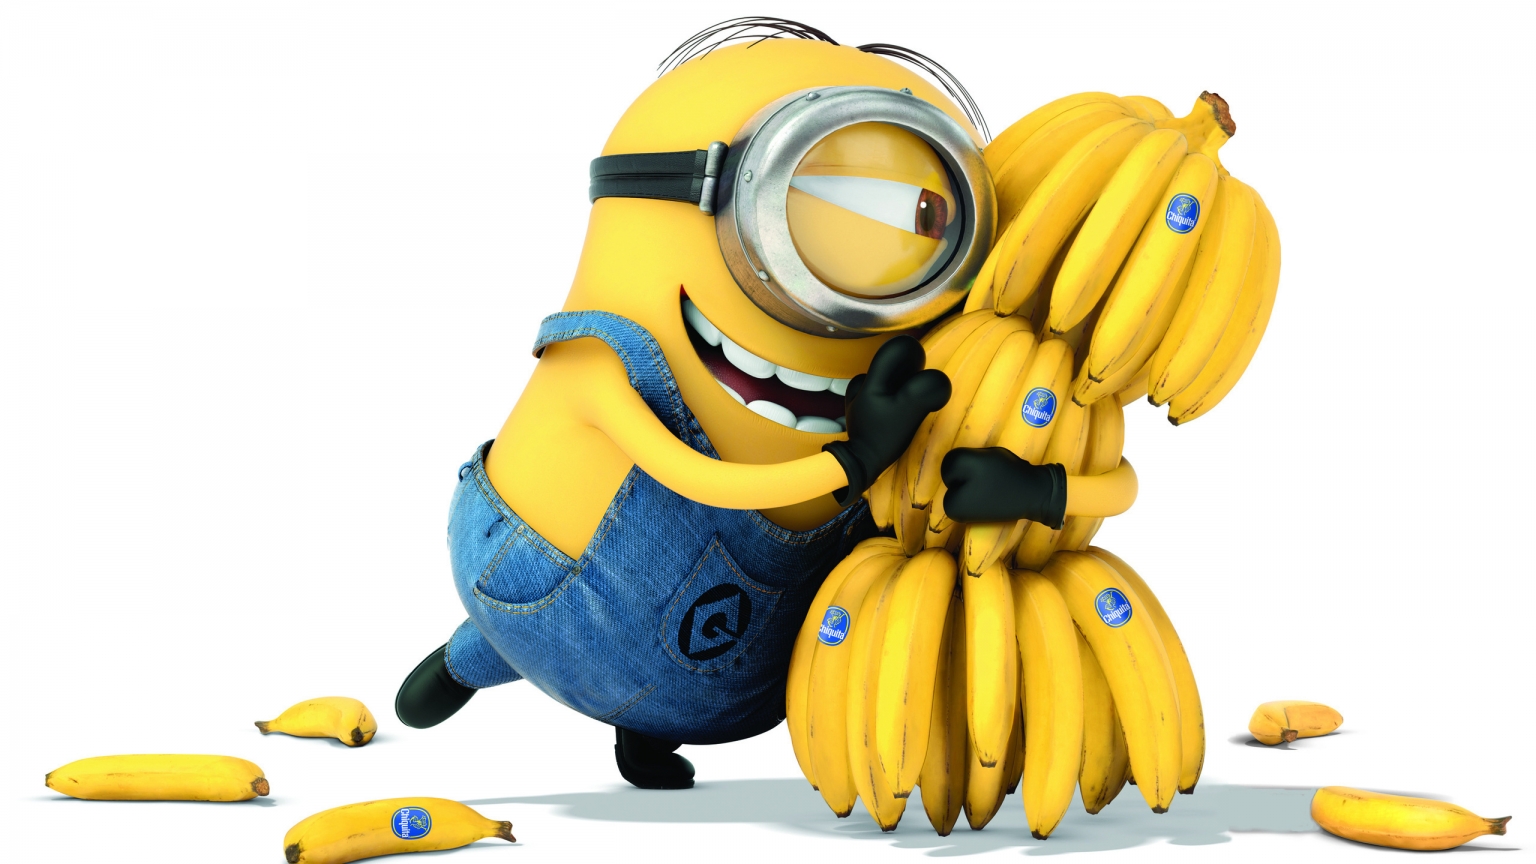 Minion Banana for 1536 x 864 HDTV resolution